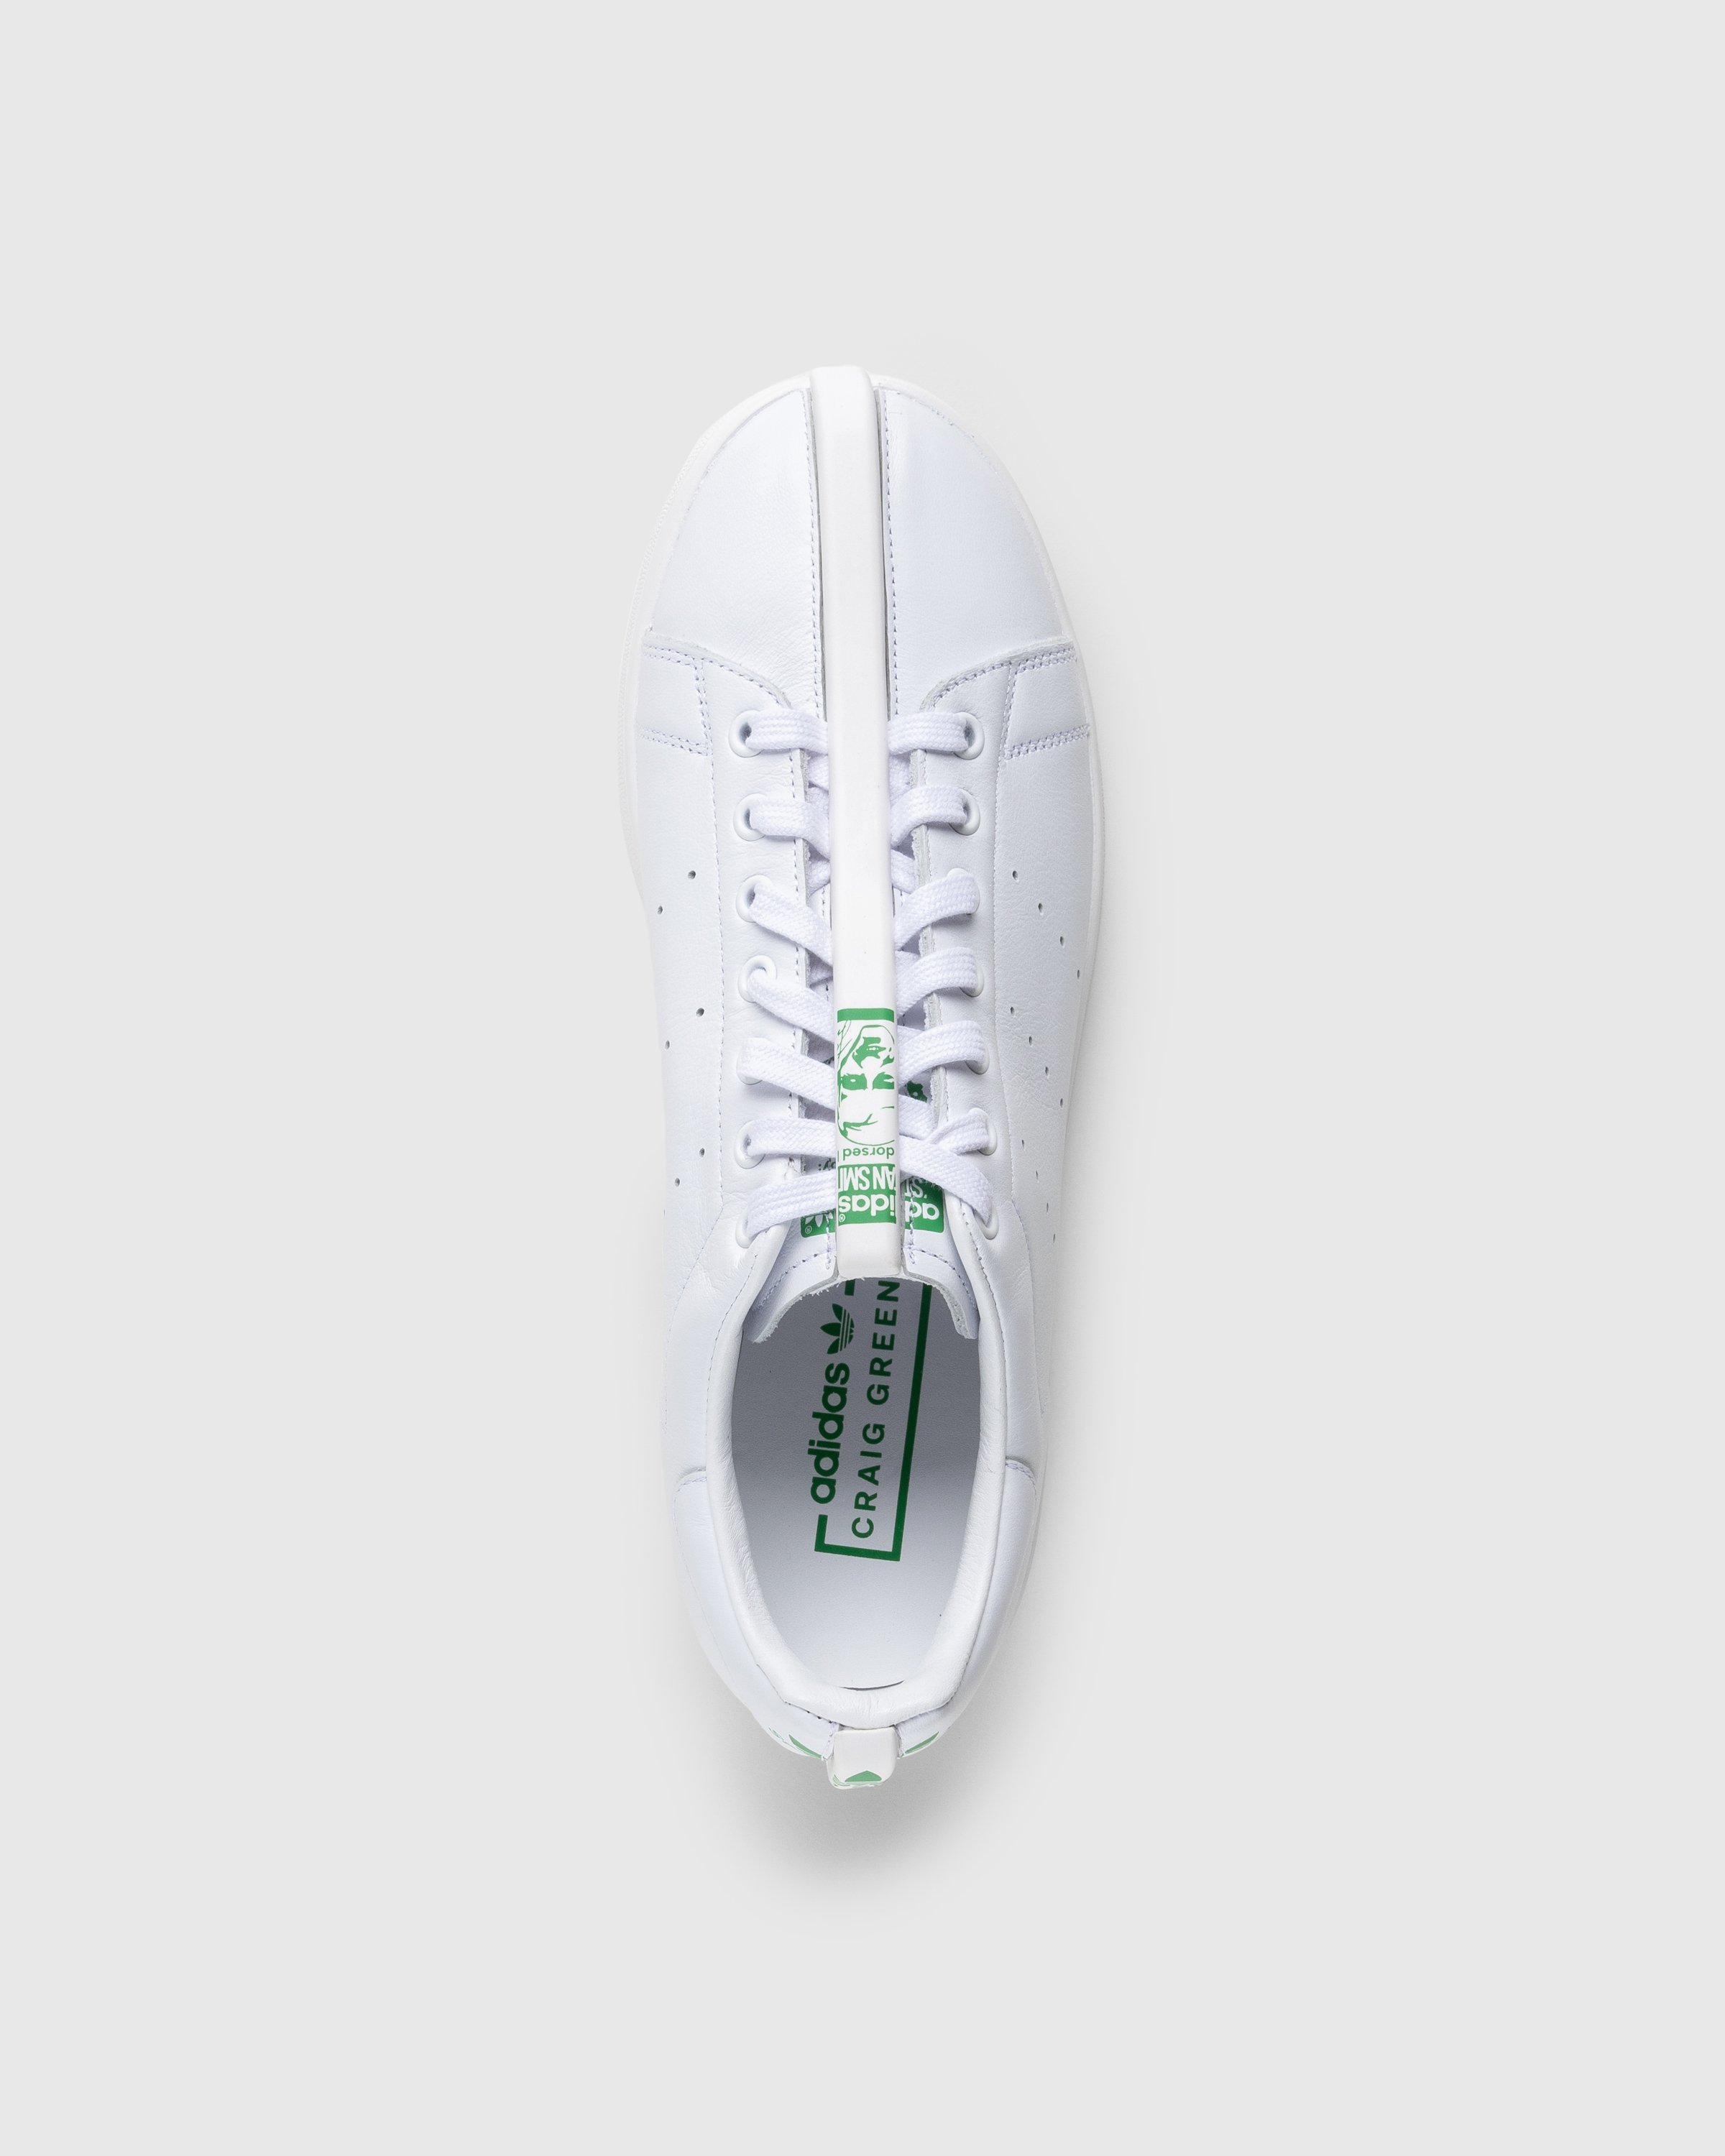 Craig Green x Adidas - CG Split Stan Smith CWHITE/CWHITE/CBLACK - Footwear - White - Image 5